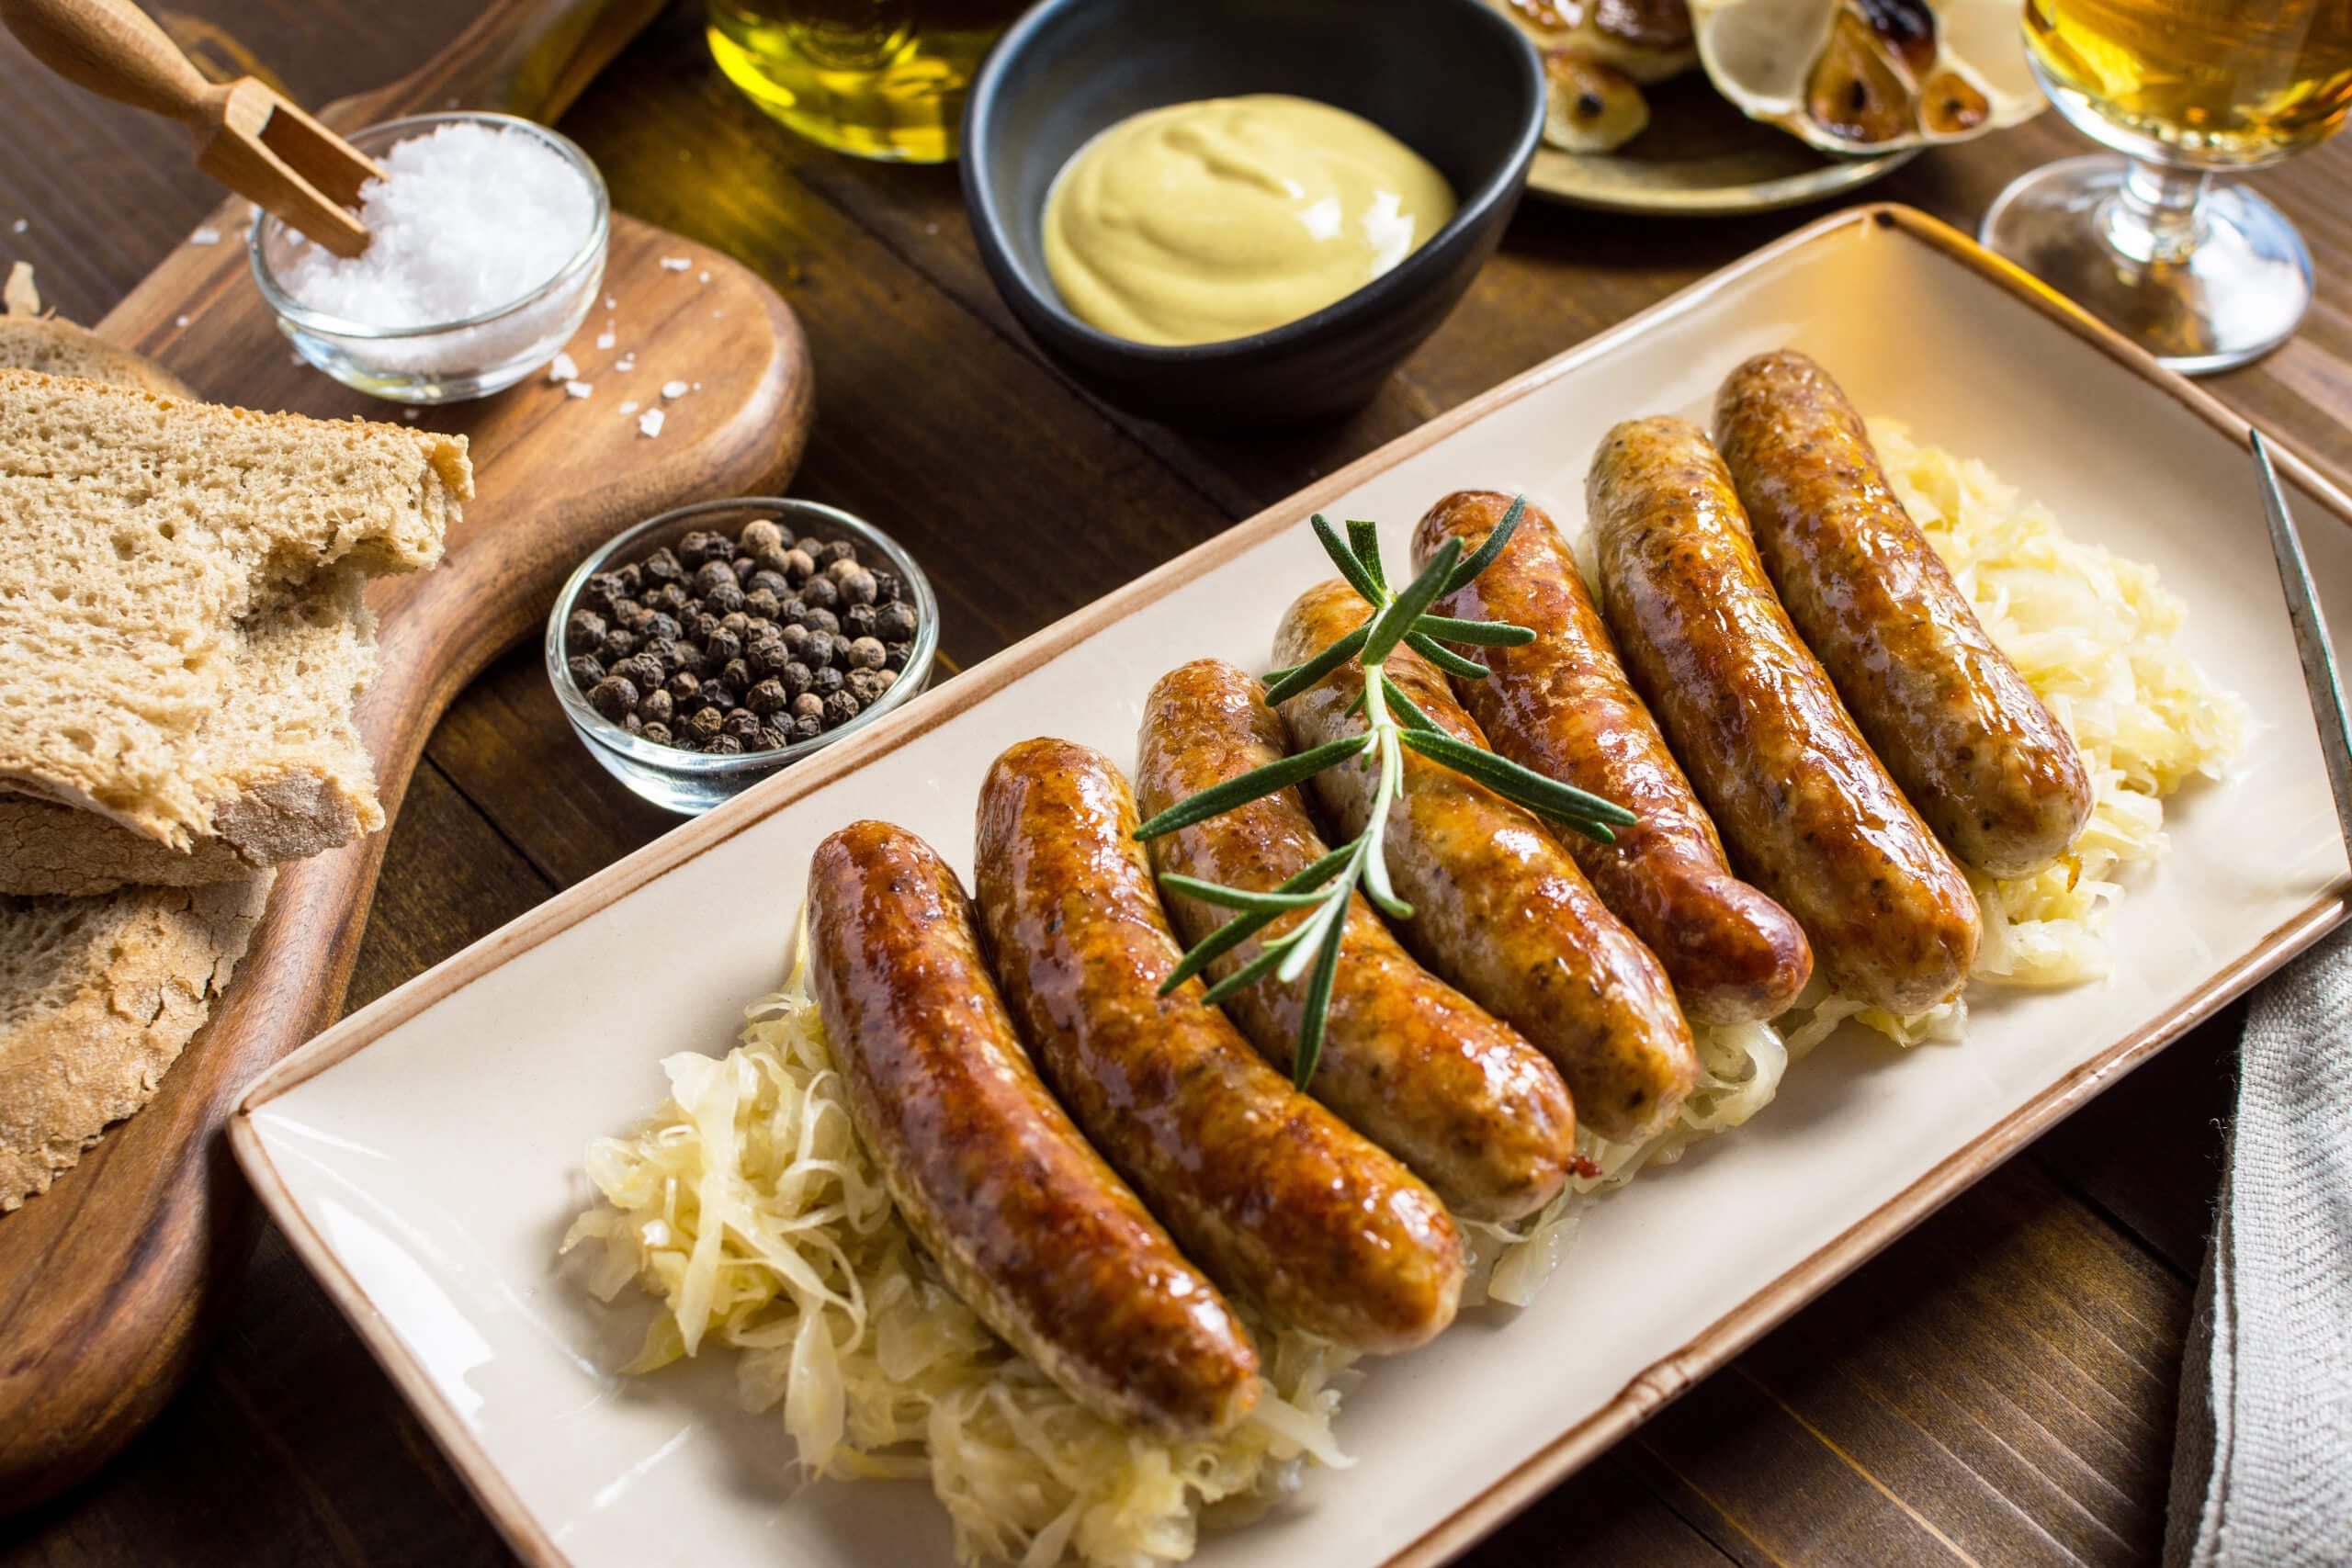 Bratwurst Dinner - A German Classic - The Butcher Shop, Inc.